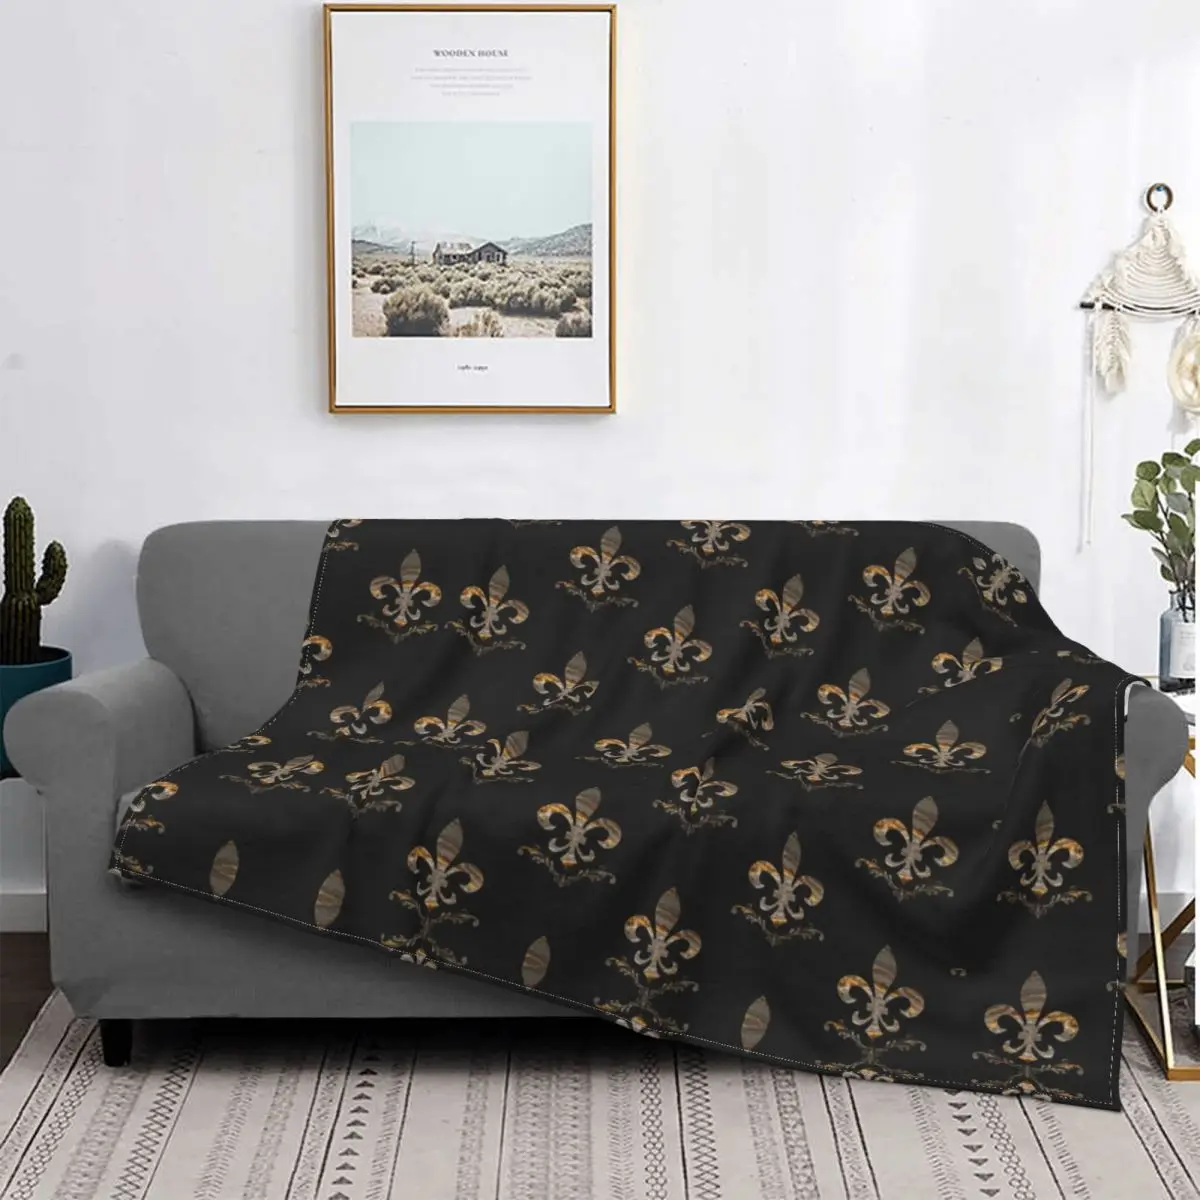 

Sofa Fleece Royal Fleur De Lis Throw Blanket Warm Flannel Fleur-De-Lys Lily Flower Blankets for Bedding Travel Couch Bedspreads